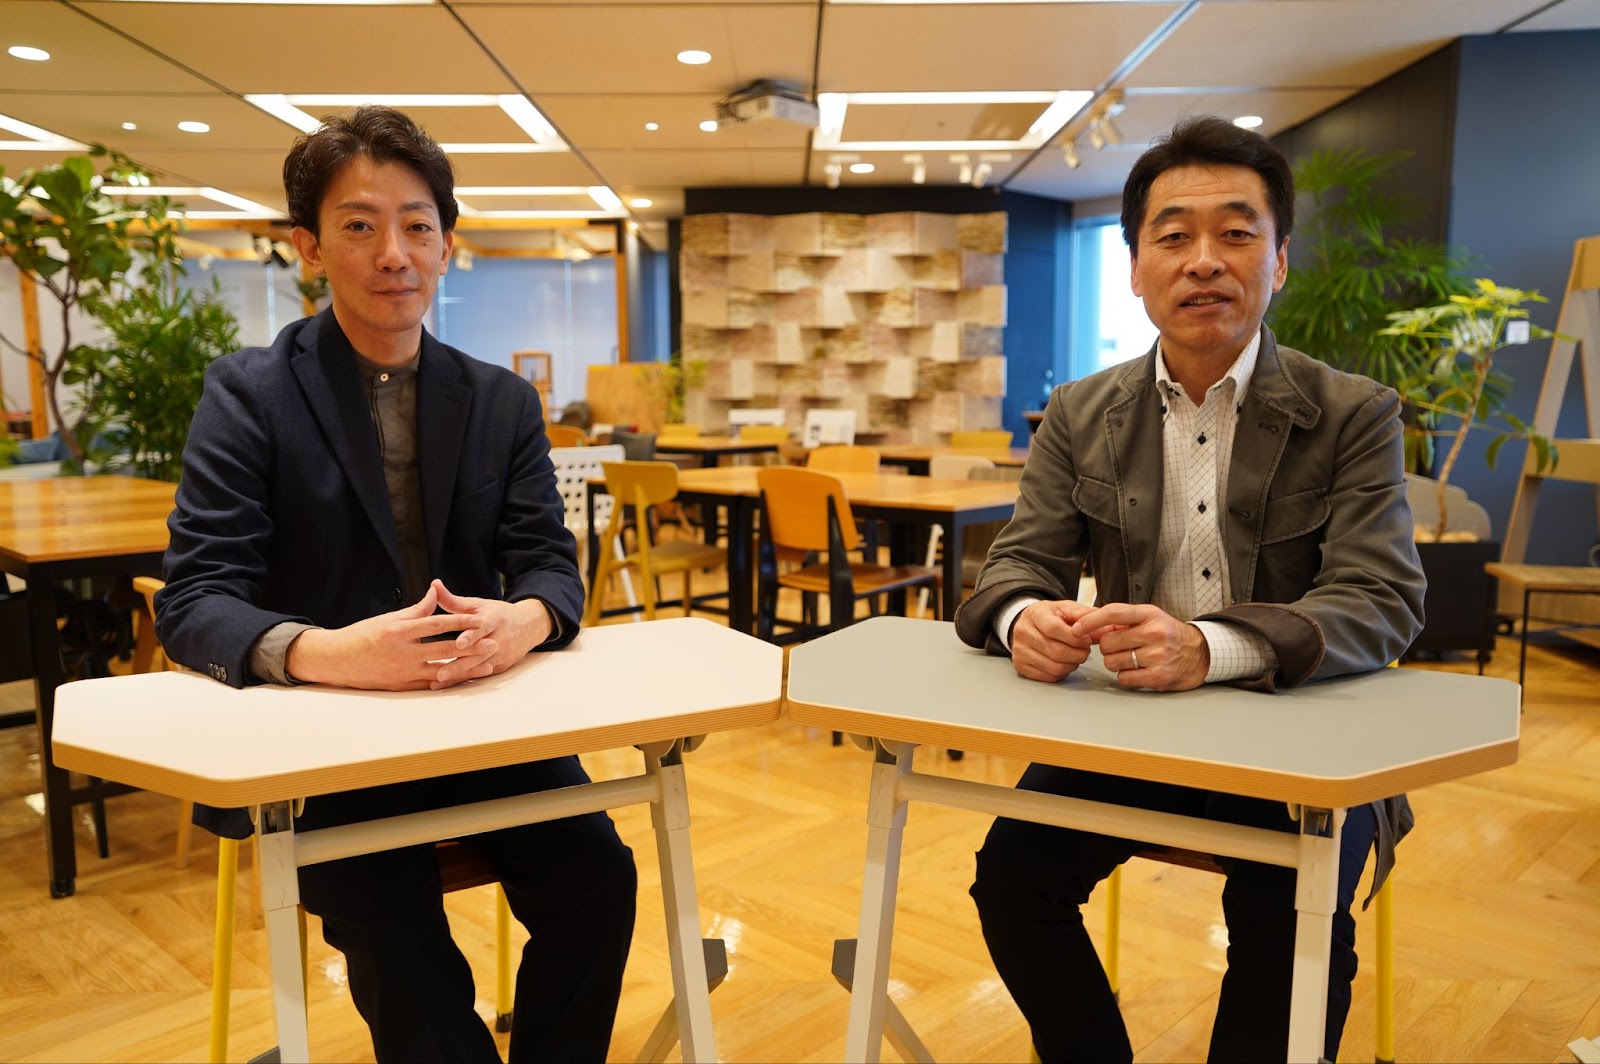 FabCafe Nagoyaの対談連載「crQlr dialogue 1 on 1」に当社社員が取材協力した記事が掲載されました